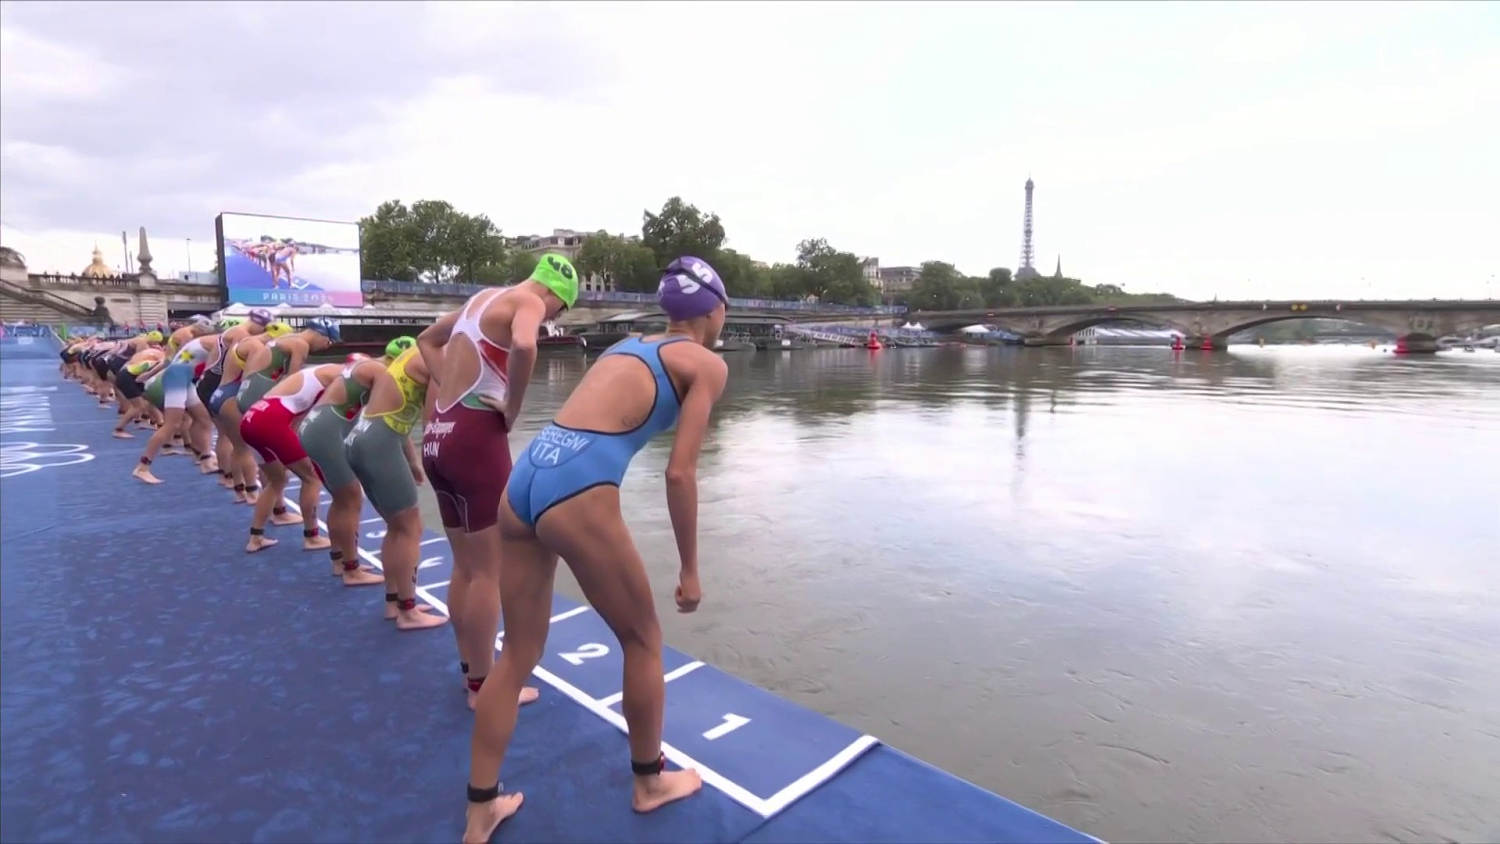 Women’s triathlon hit the Seine after it’s declared safe for swimming